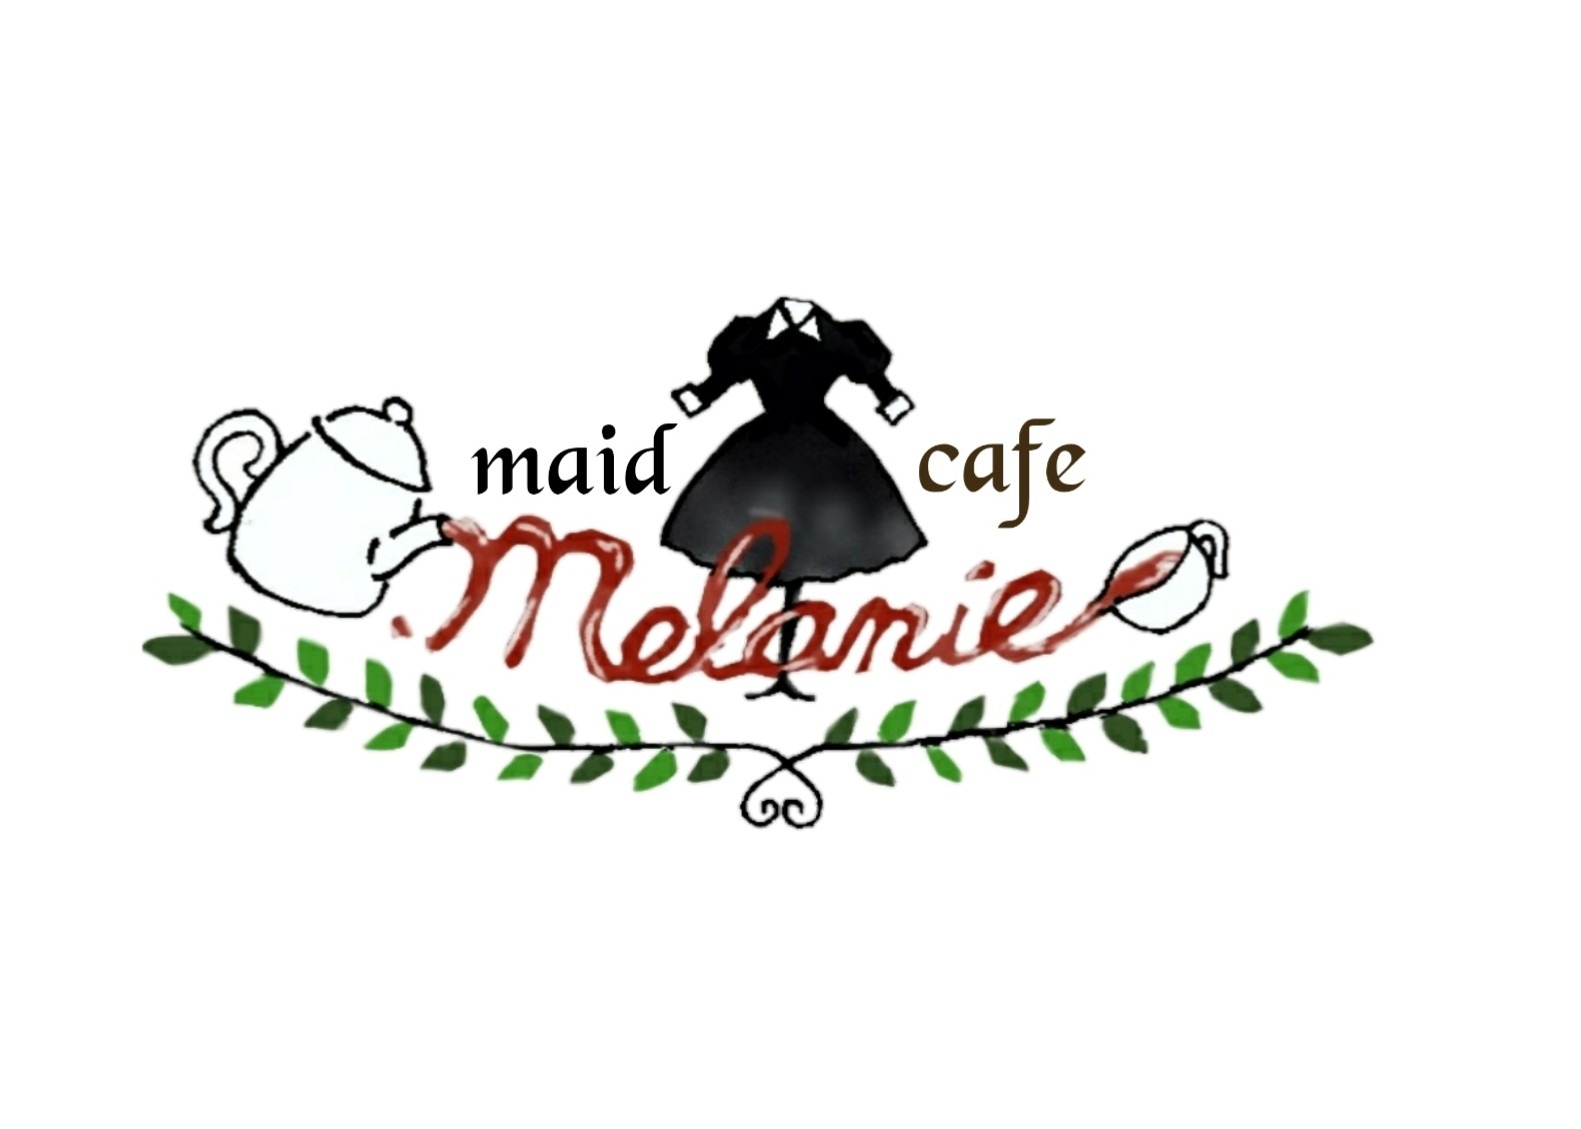 Maid Cafe Melanie